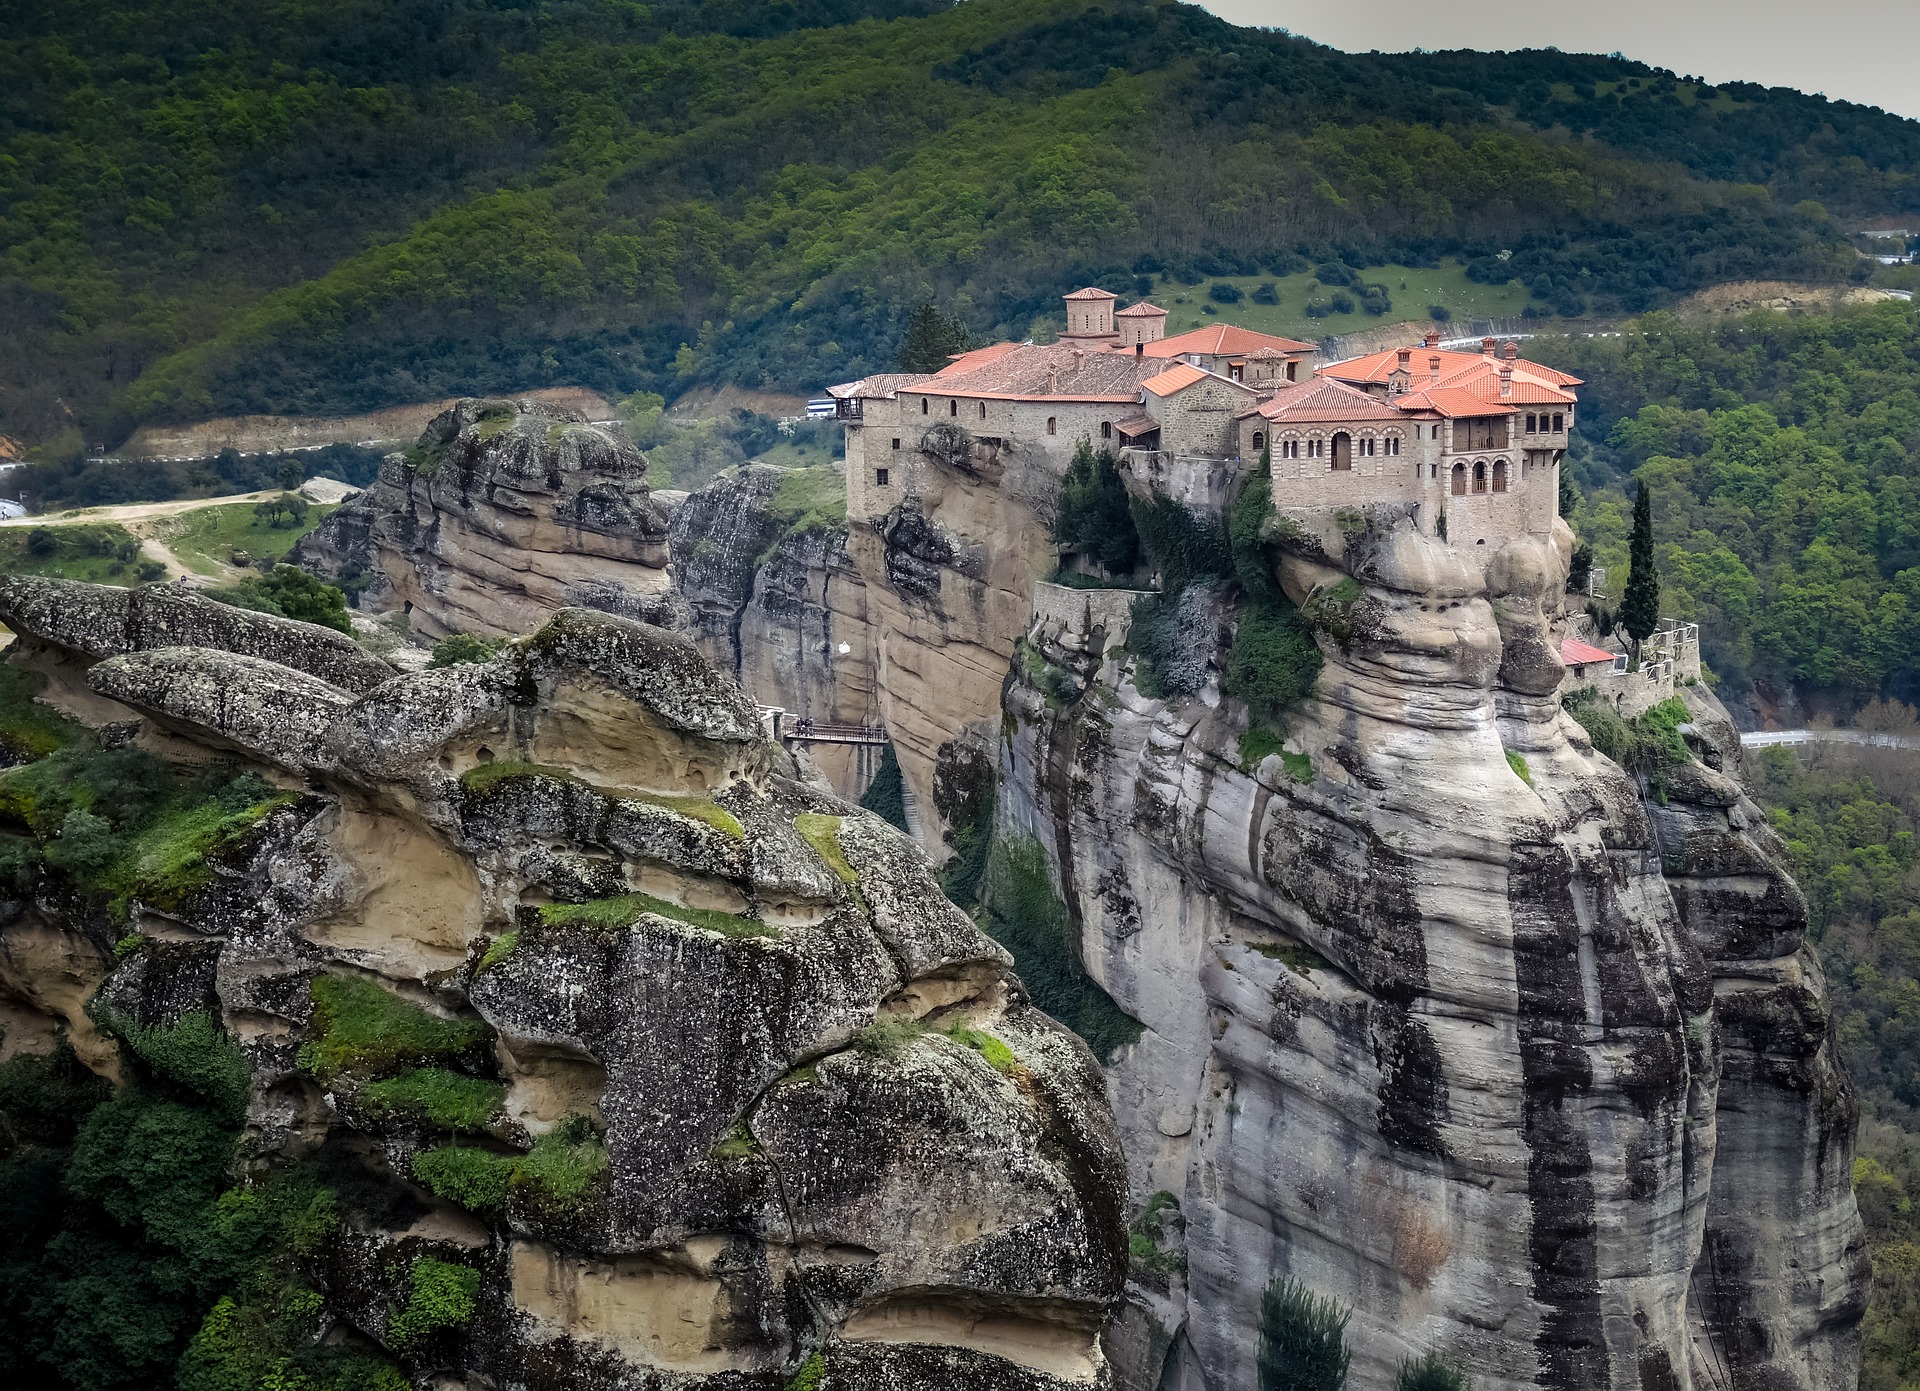 Monastery on a rock in the rocky landscape of Meteora